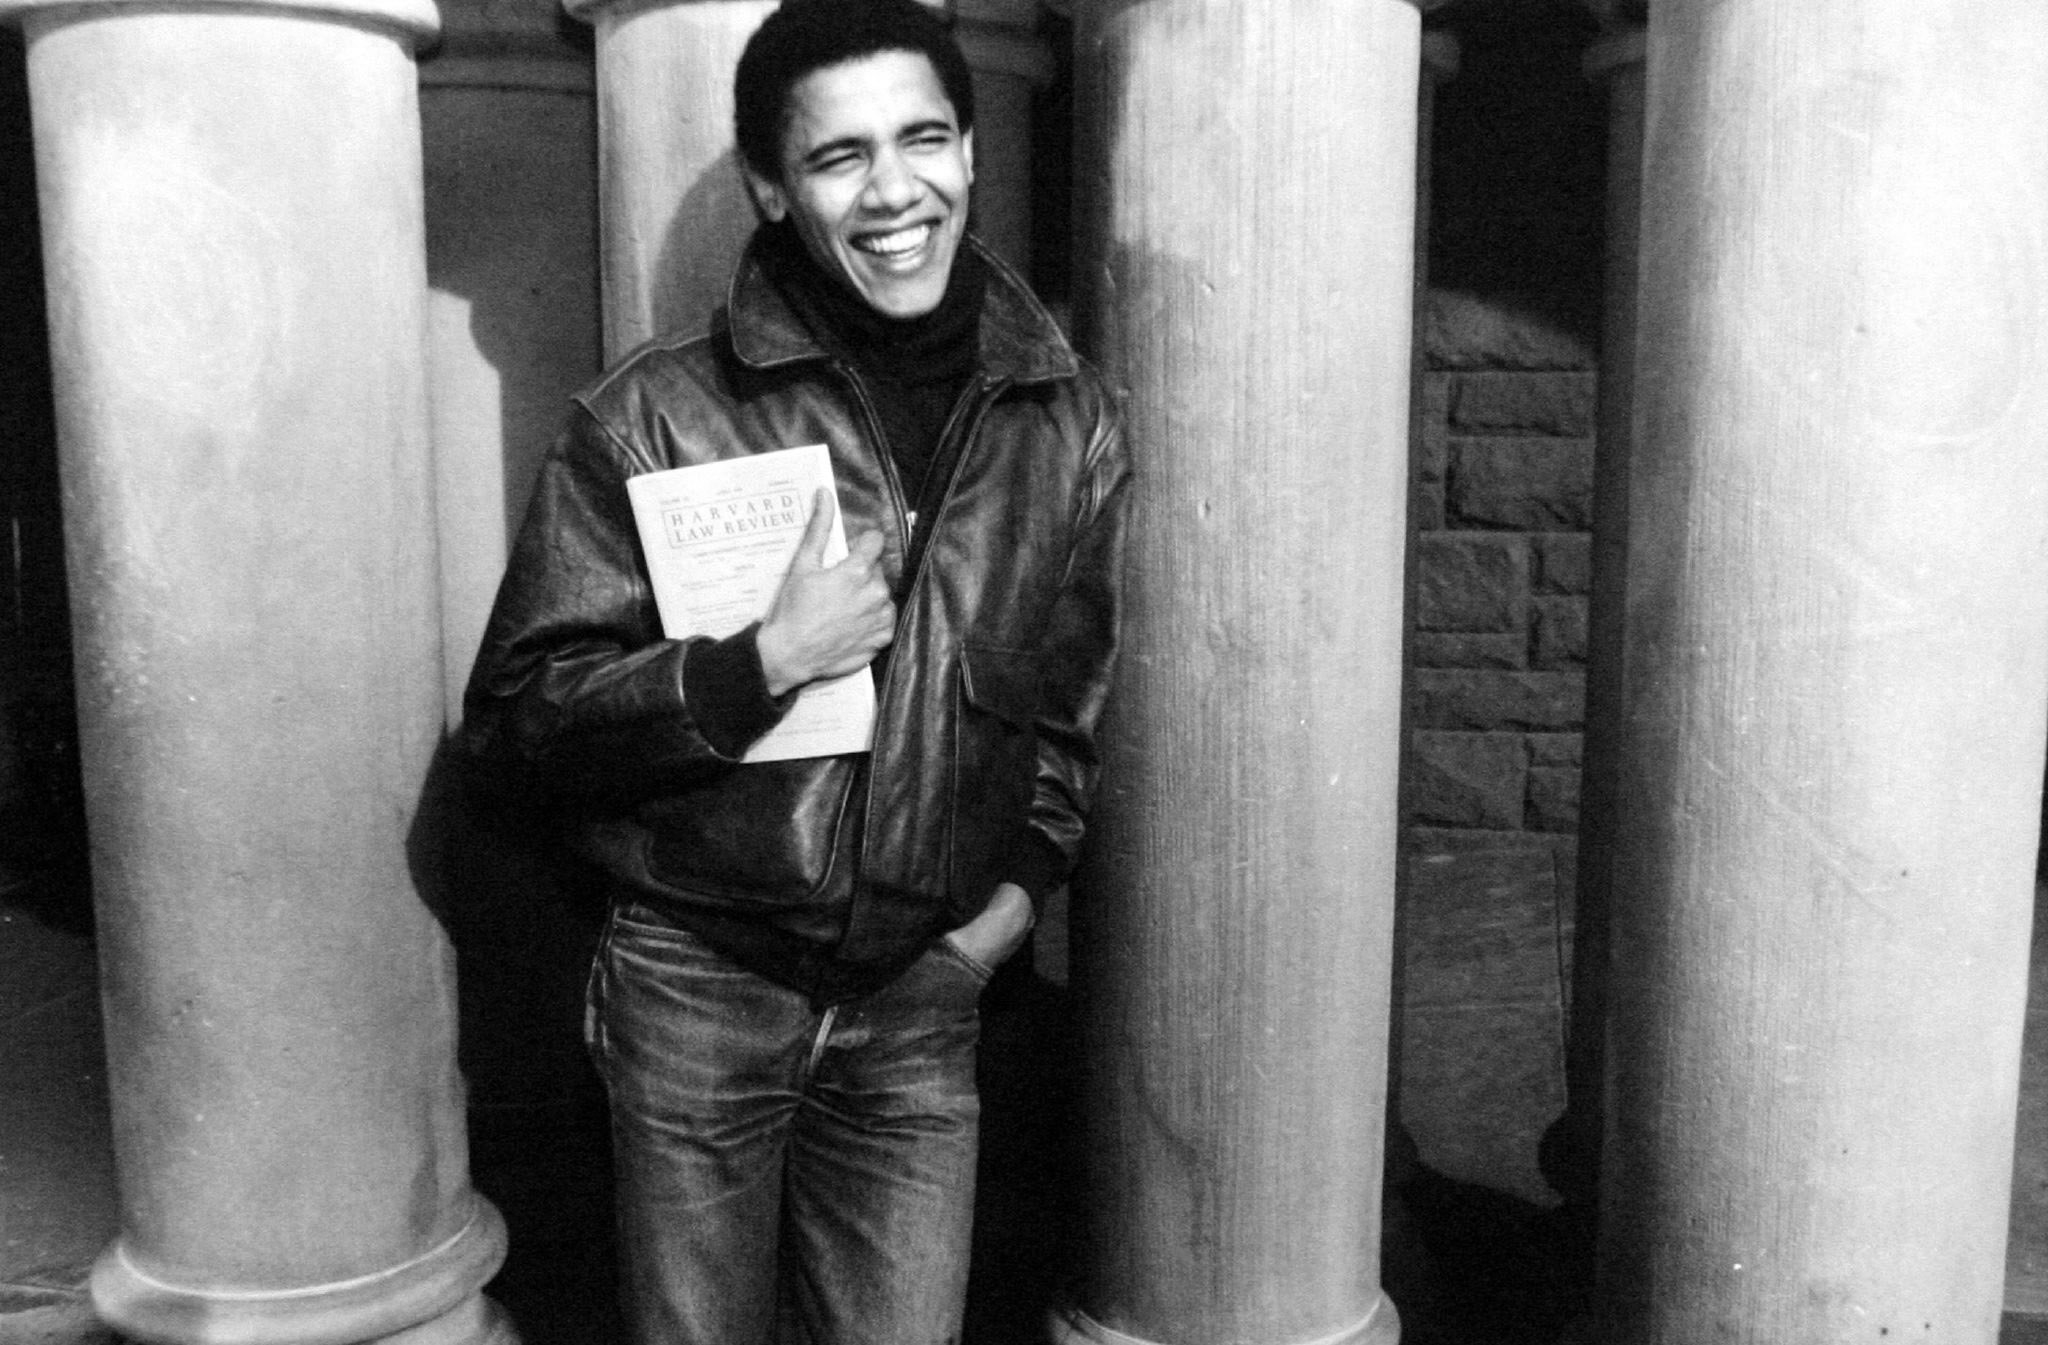 Young Barack Obama smiling